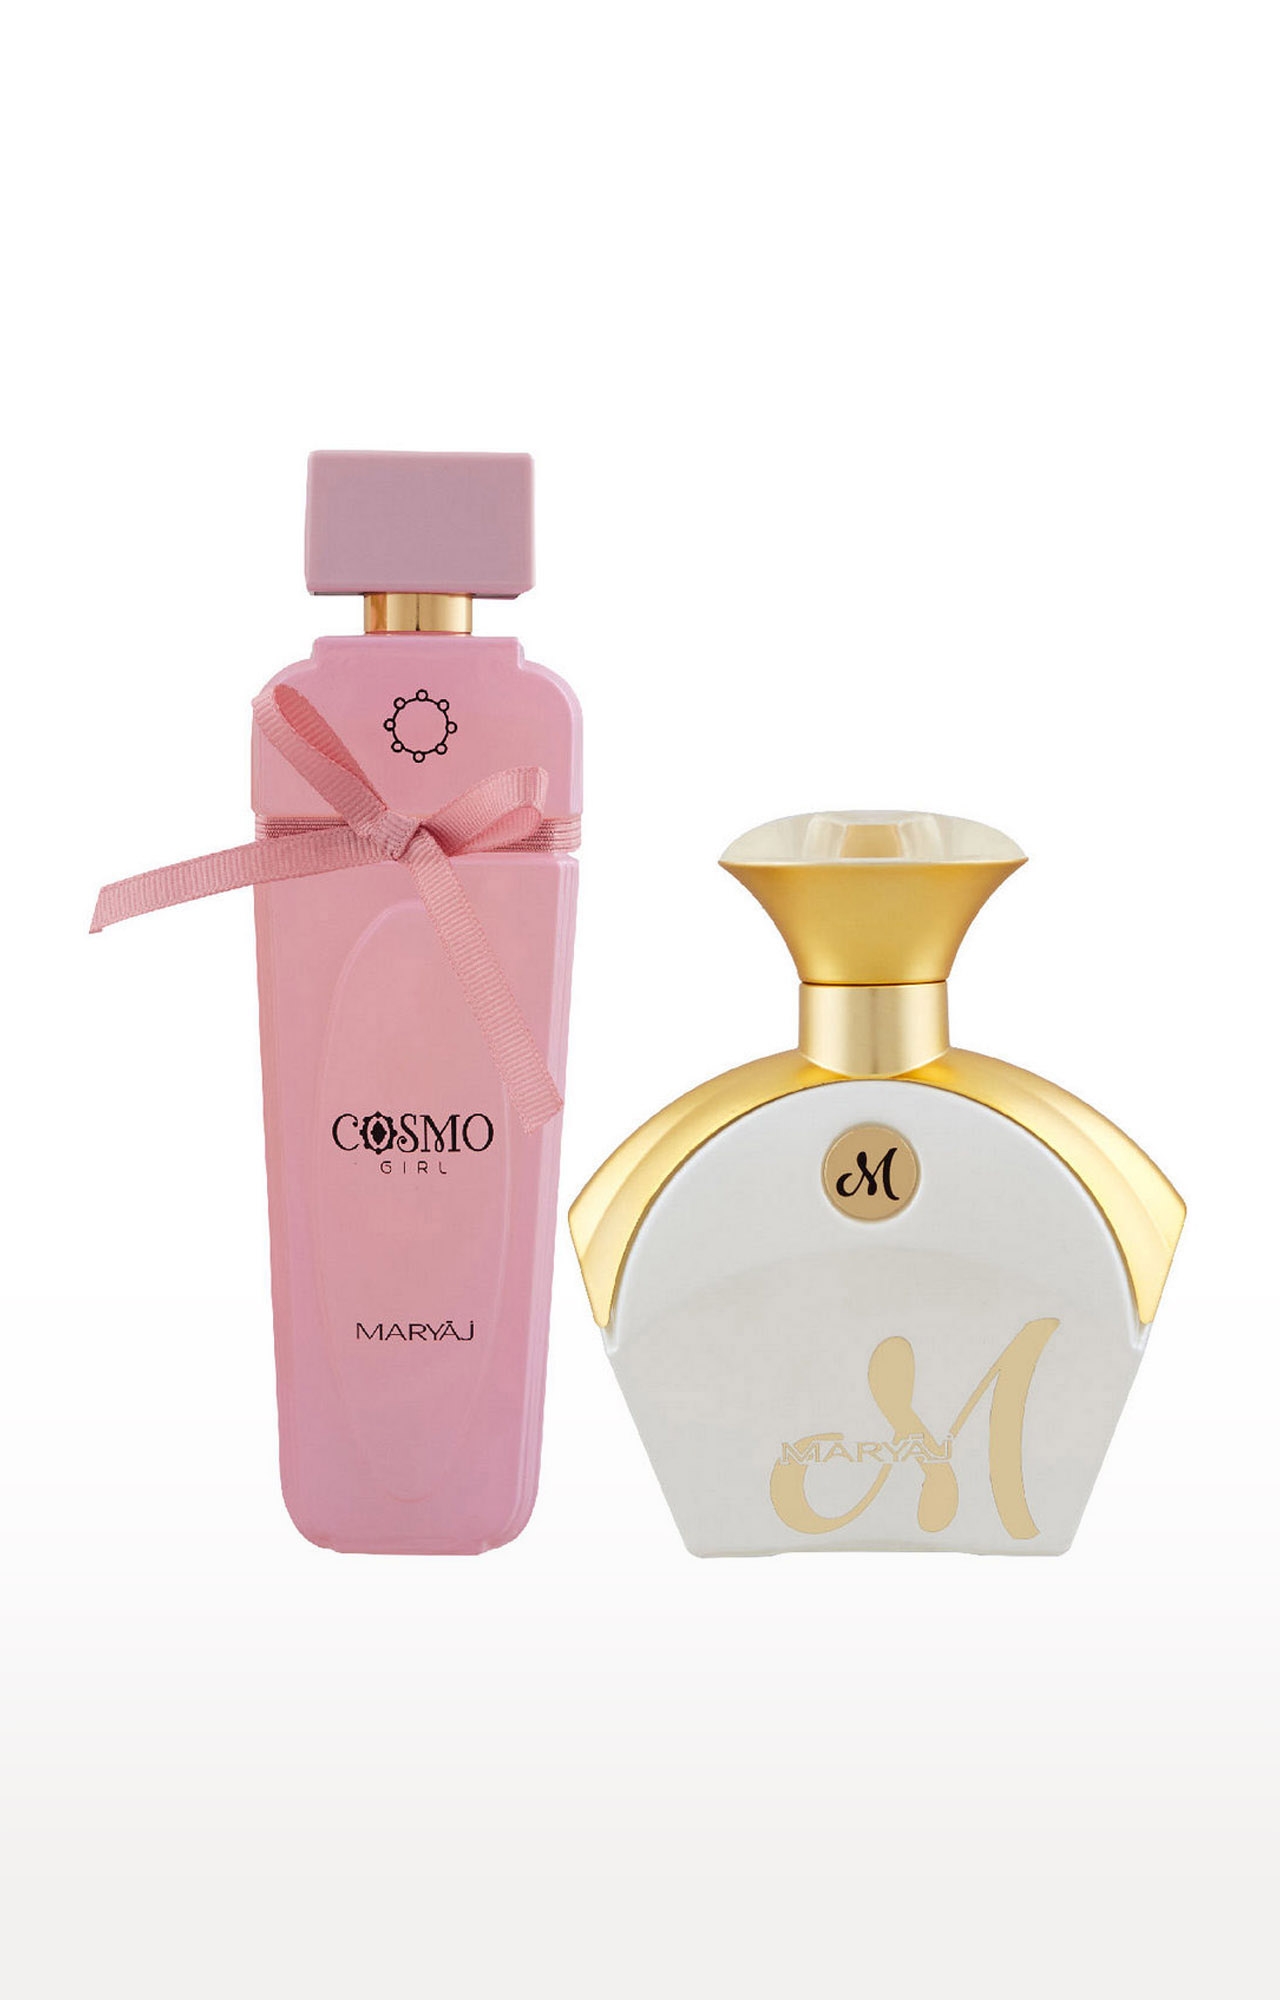 Maryaj Cosmo Girl Eau De Parfum Perfume 100ml for Women and Maryaj M White for Her Eau De Parfum Fruity Perfume 90ml for Women